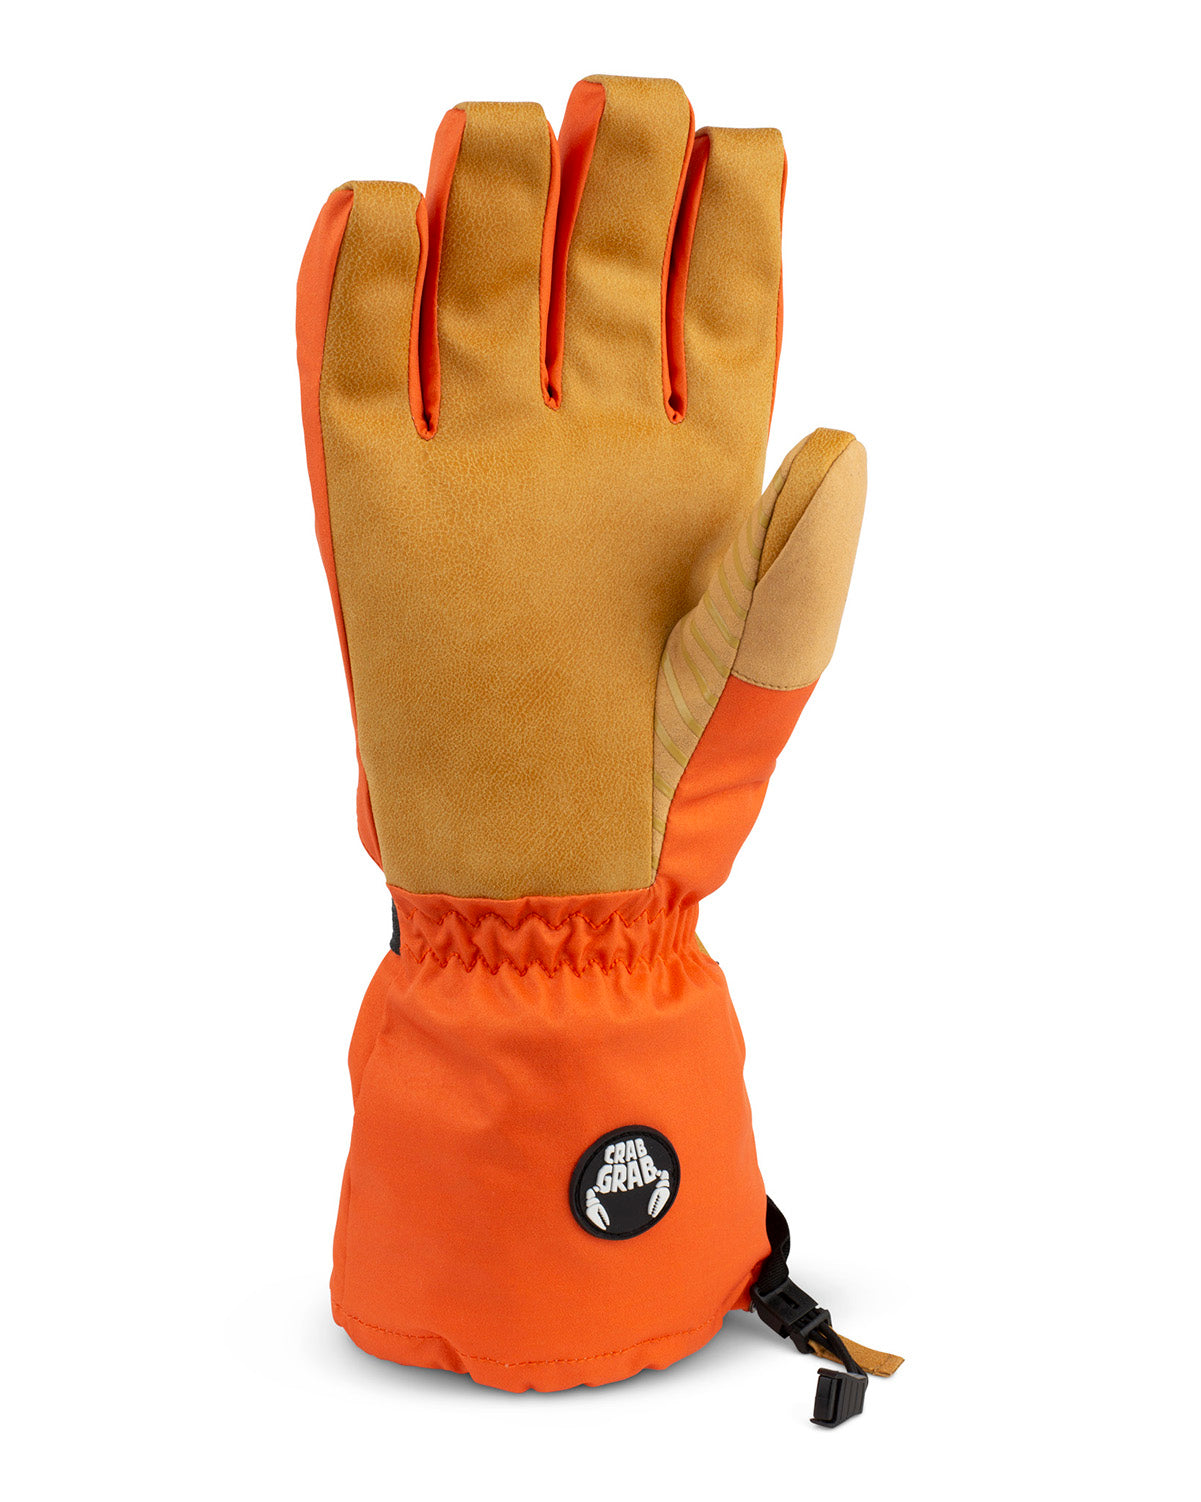 Cinch Glove - Crab Grab